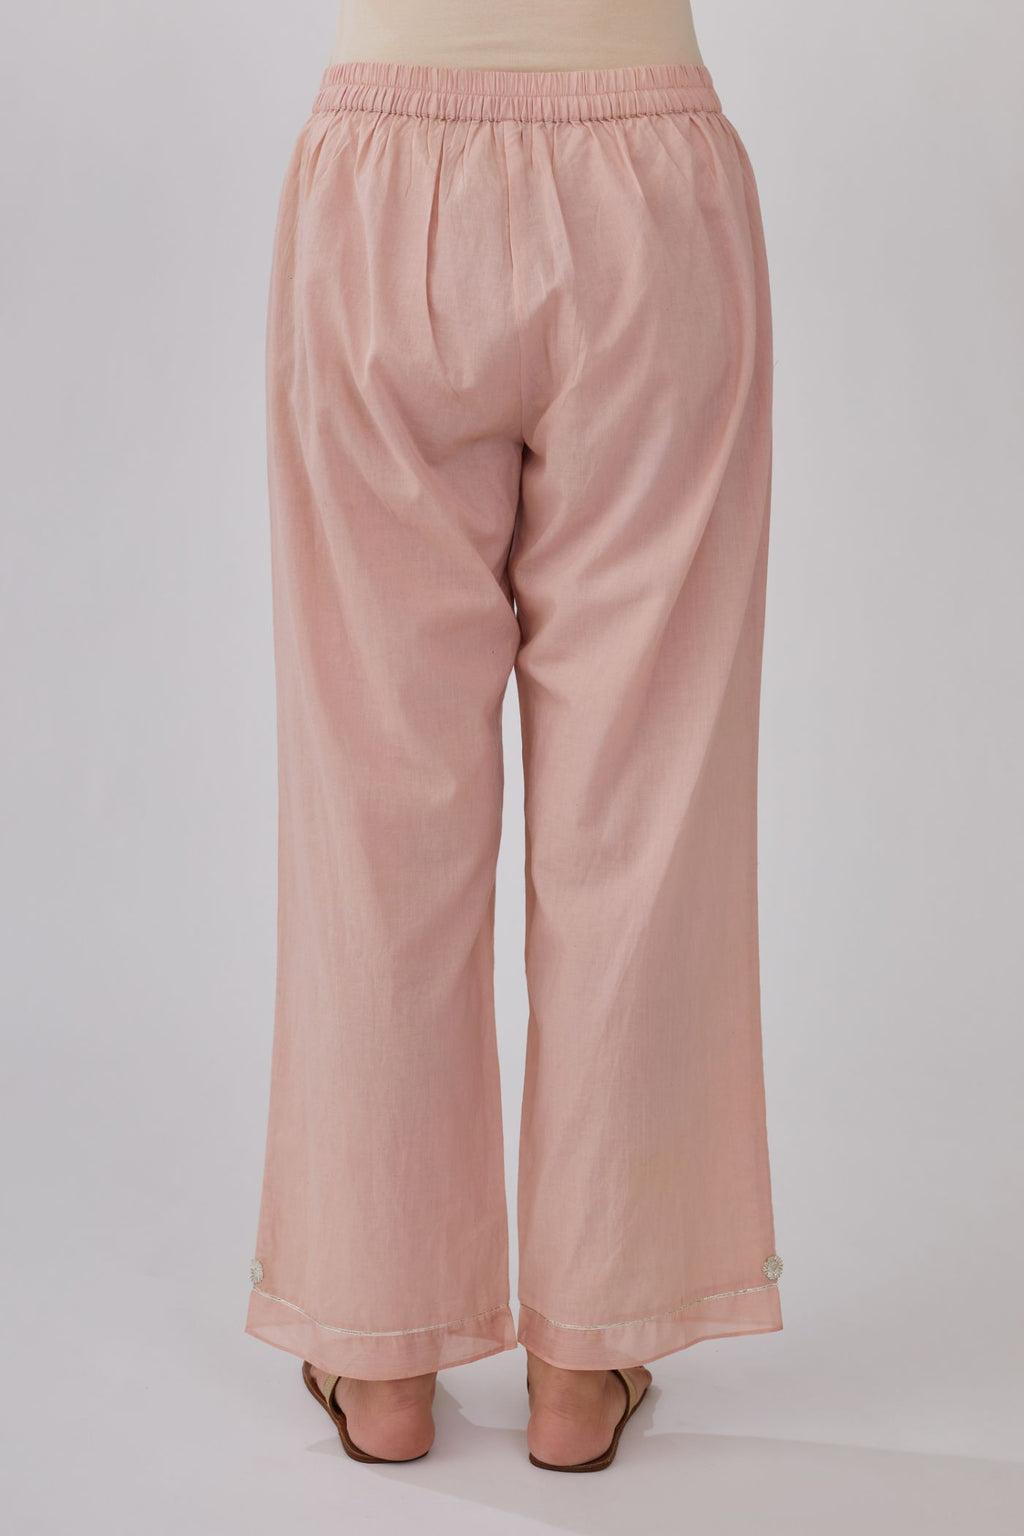 Pink straight pants with gota and silk chanderi fabric detaling at bottom hem